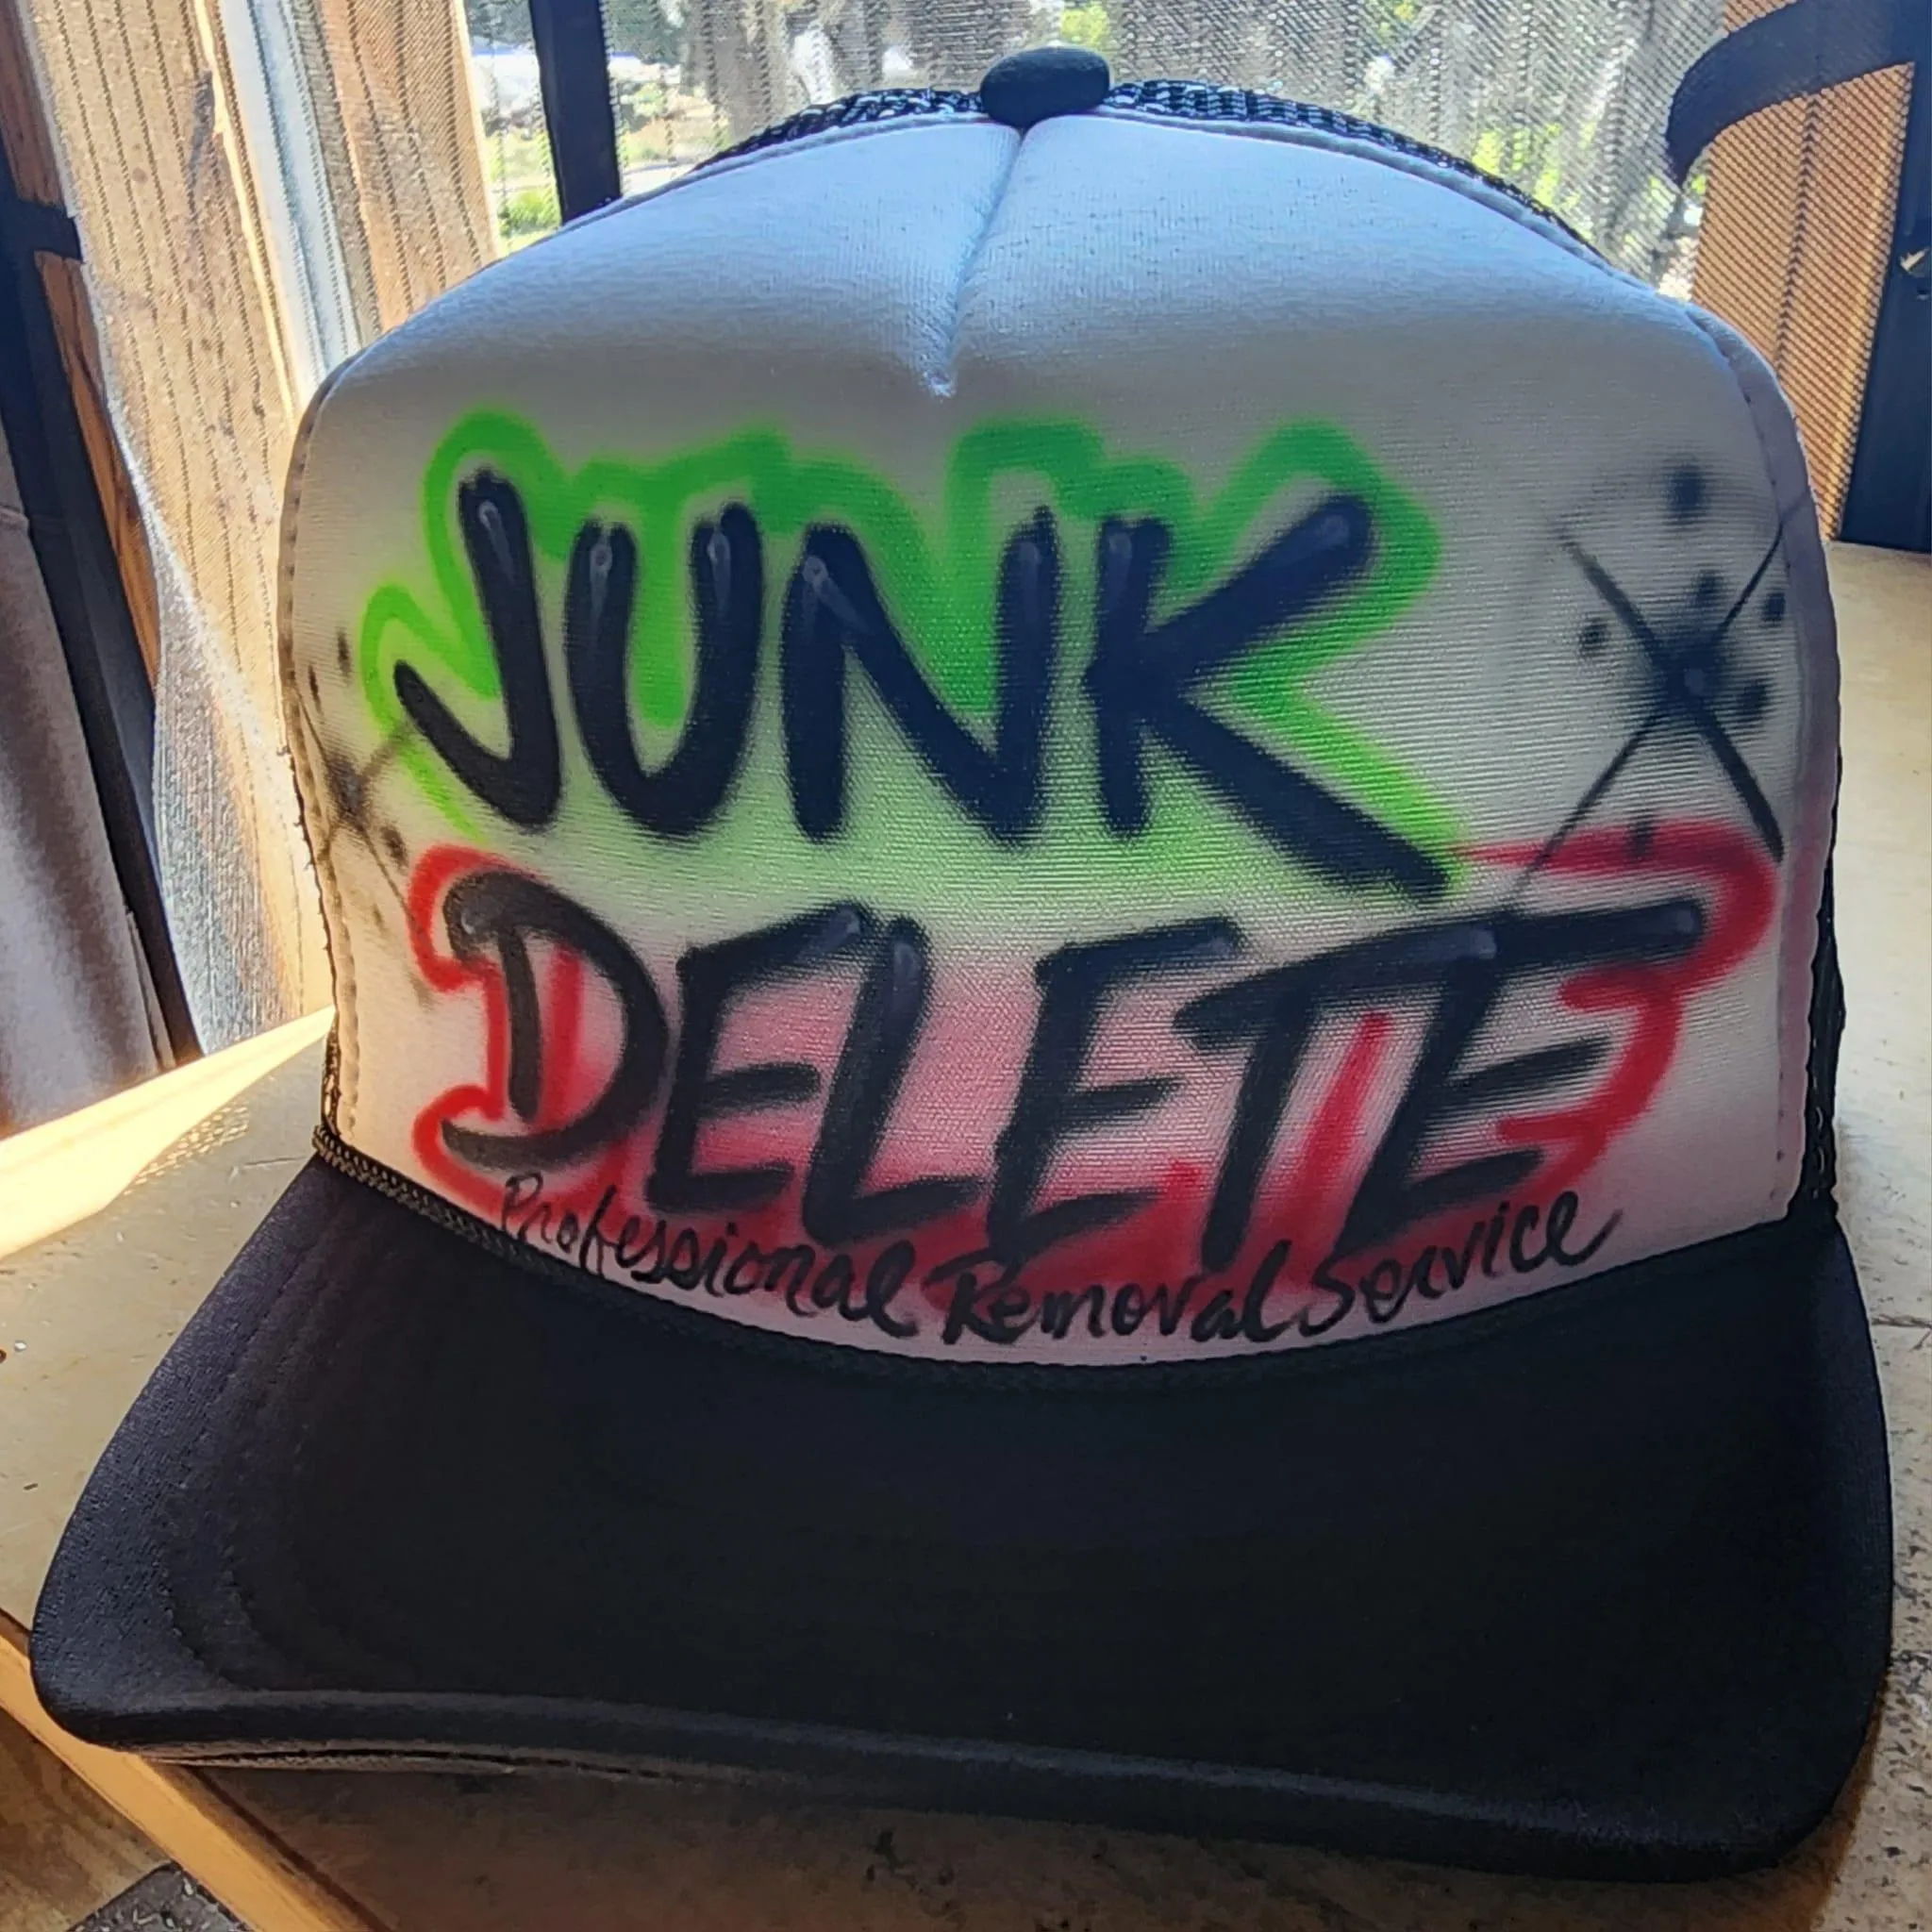 Junk Removal for Junk Delete Junk Removal & Demolition LLC in Southwick, MA